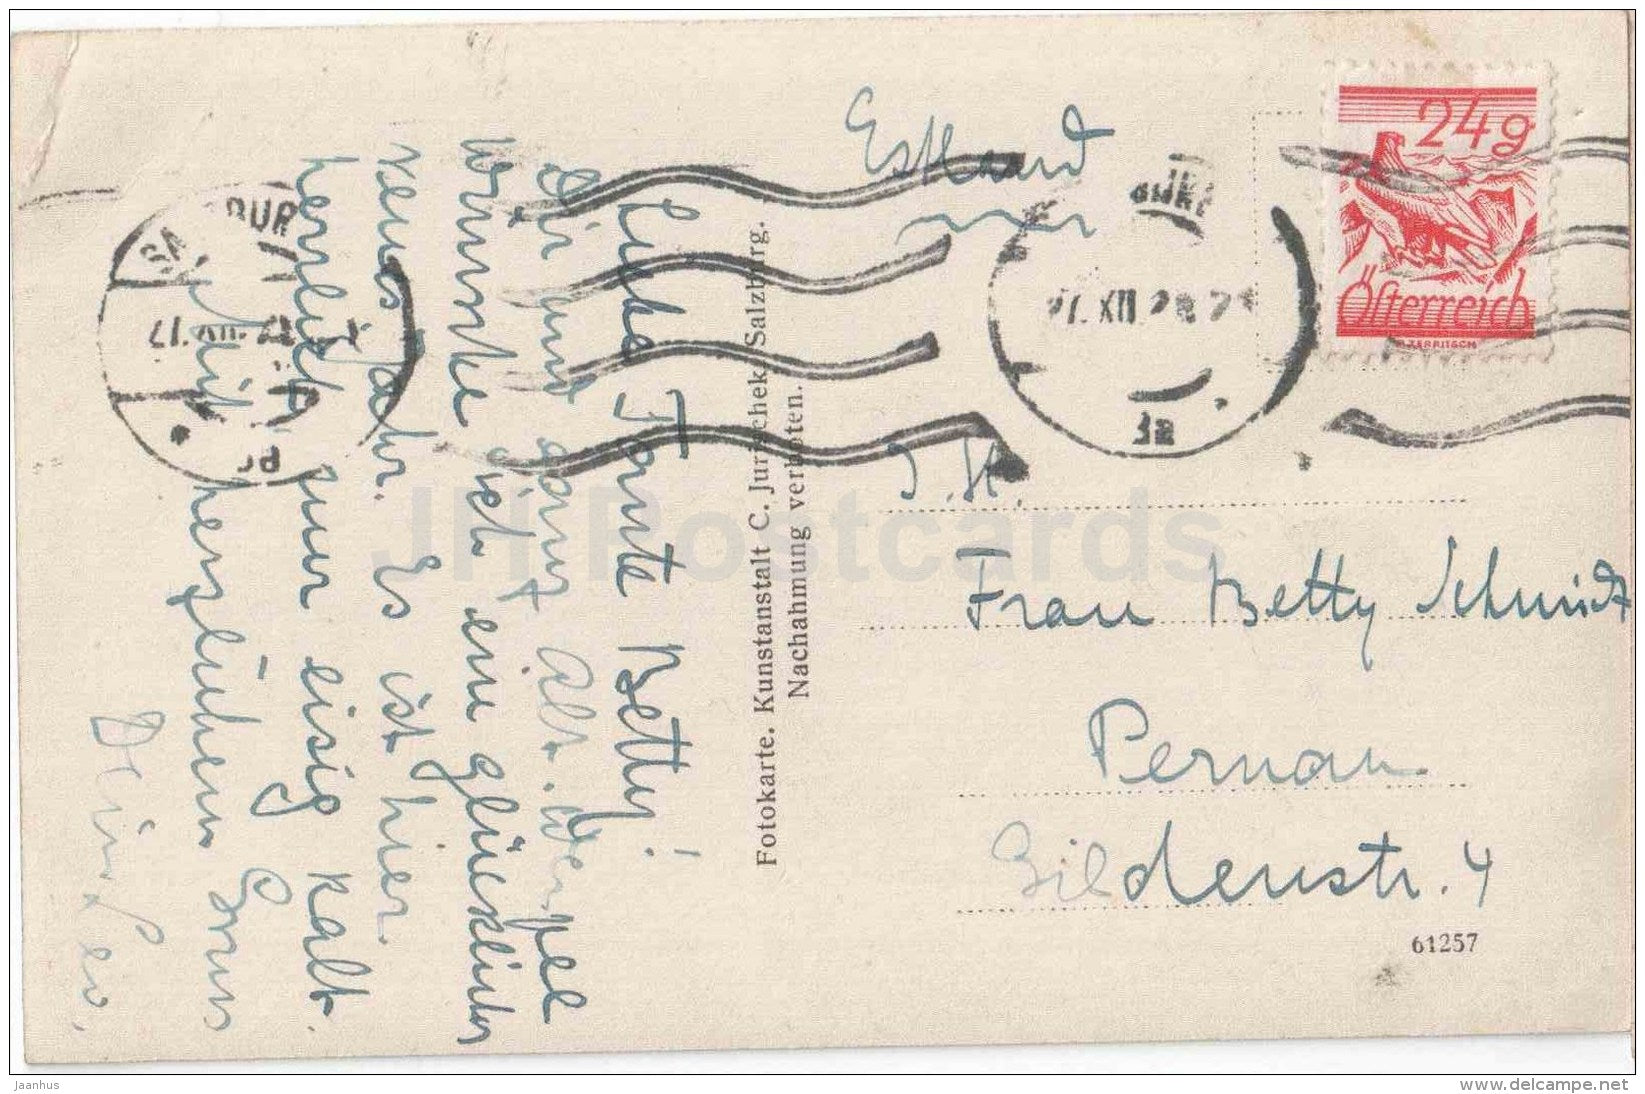 Salzburg - Kapuzinerberg - Austria - 61257 - old postcard - sent from Austria to Estonia - JH Postcards